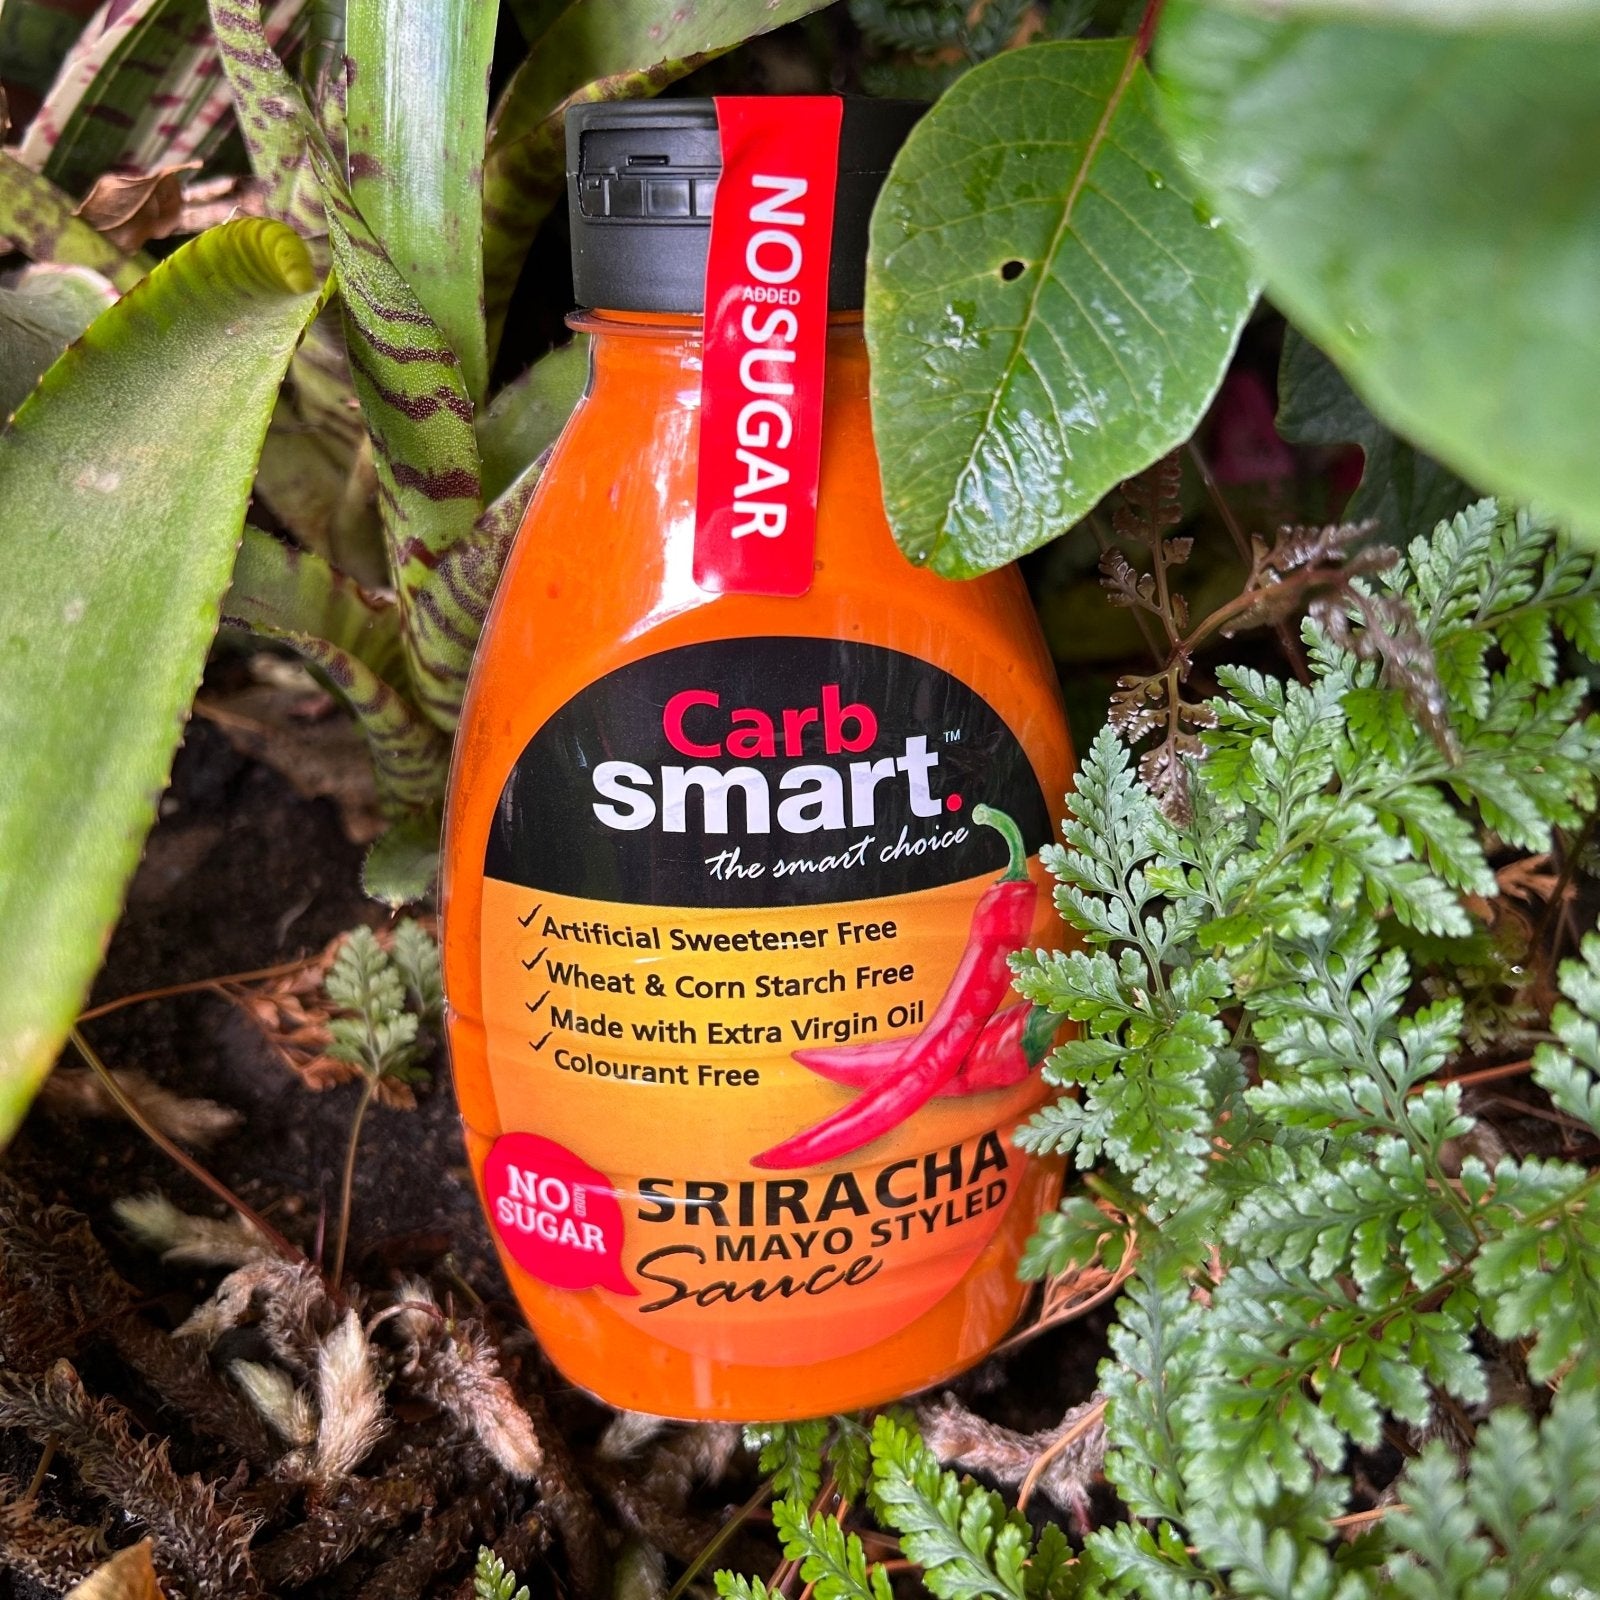 Carb Smart Sriracha Hot Sauce (380g) - The Deli